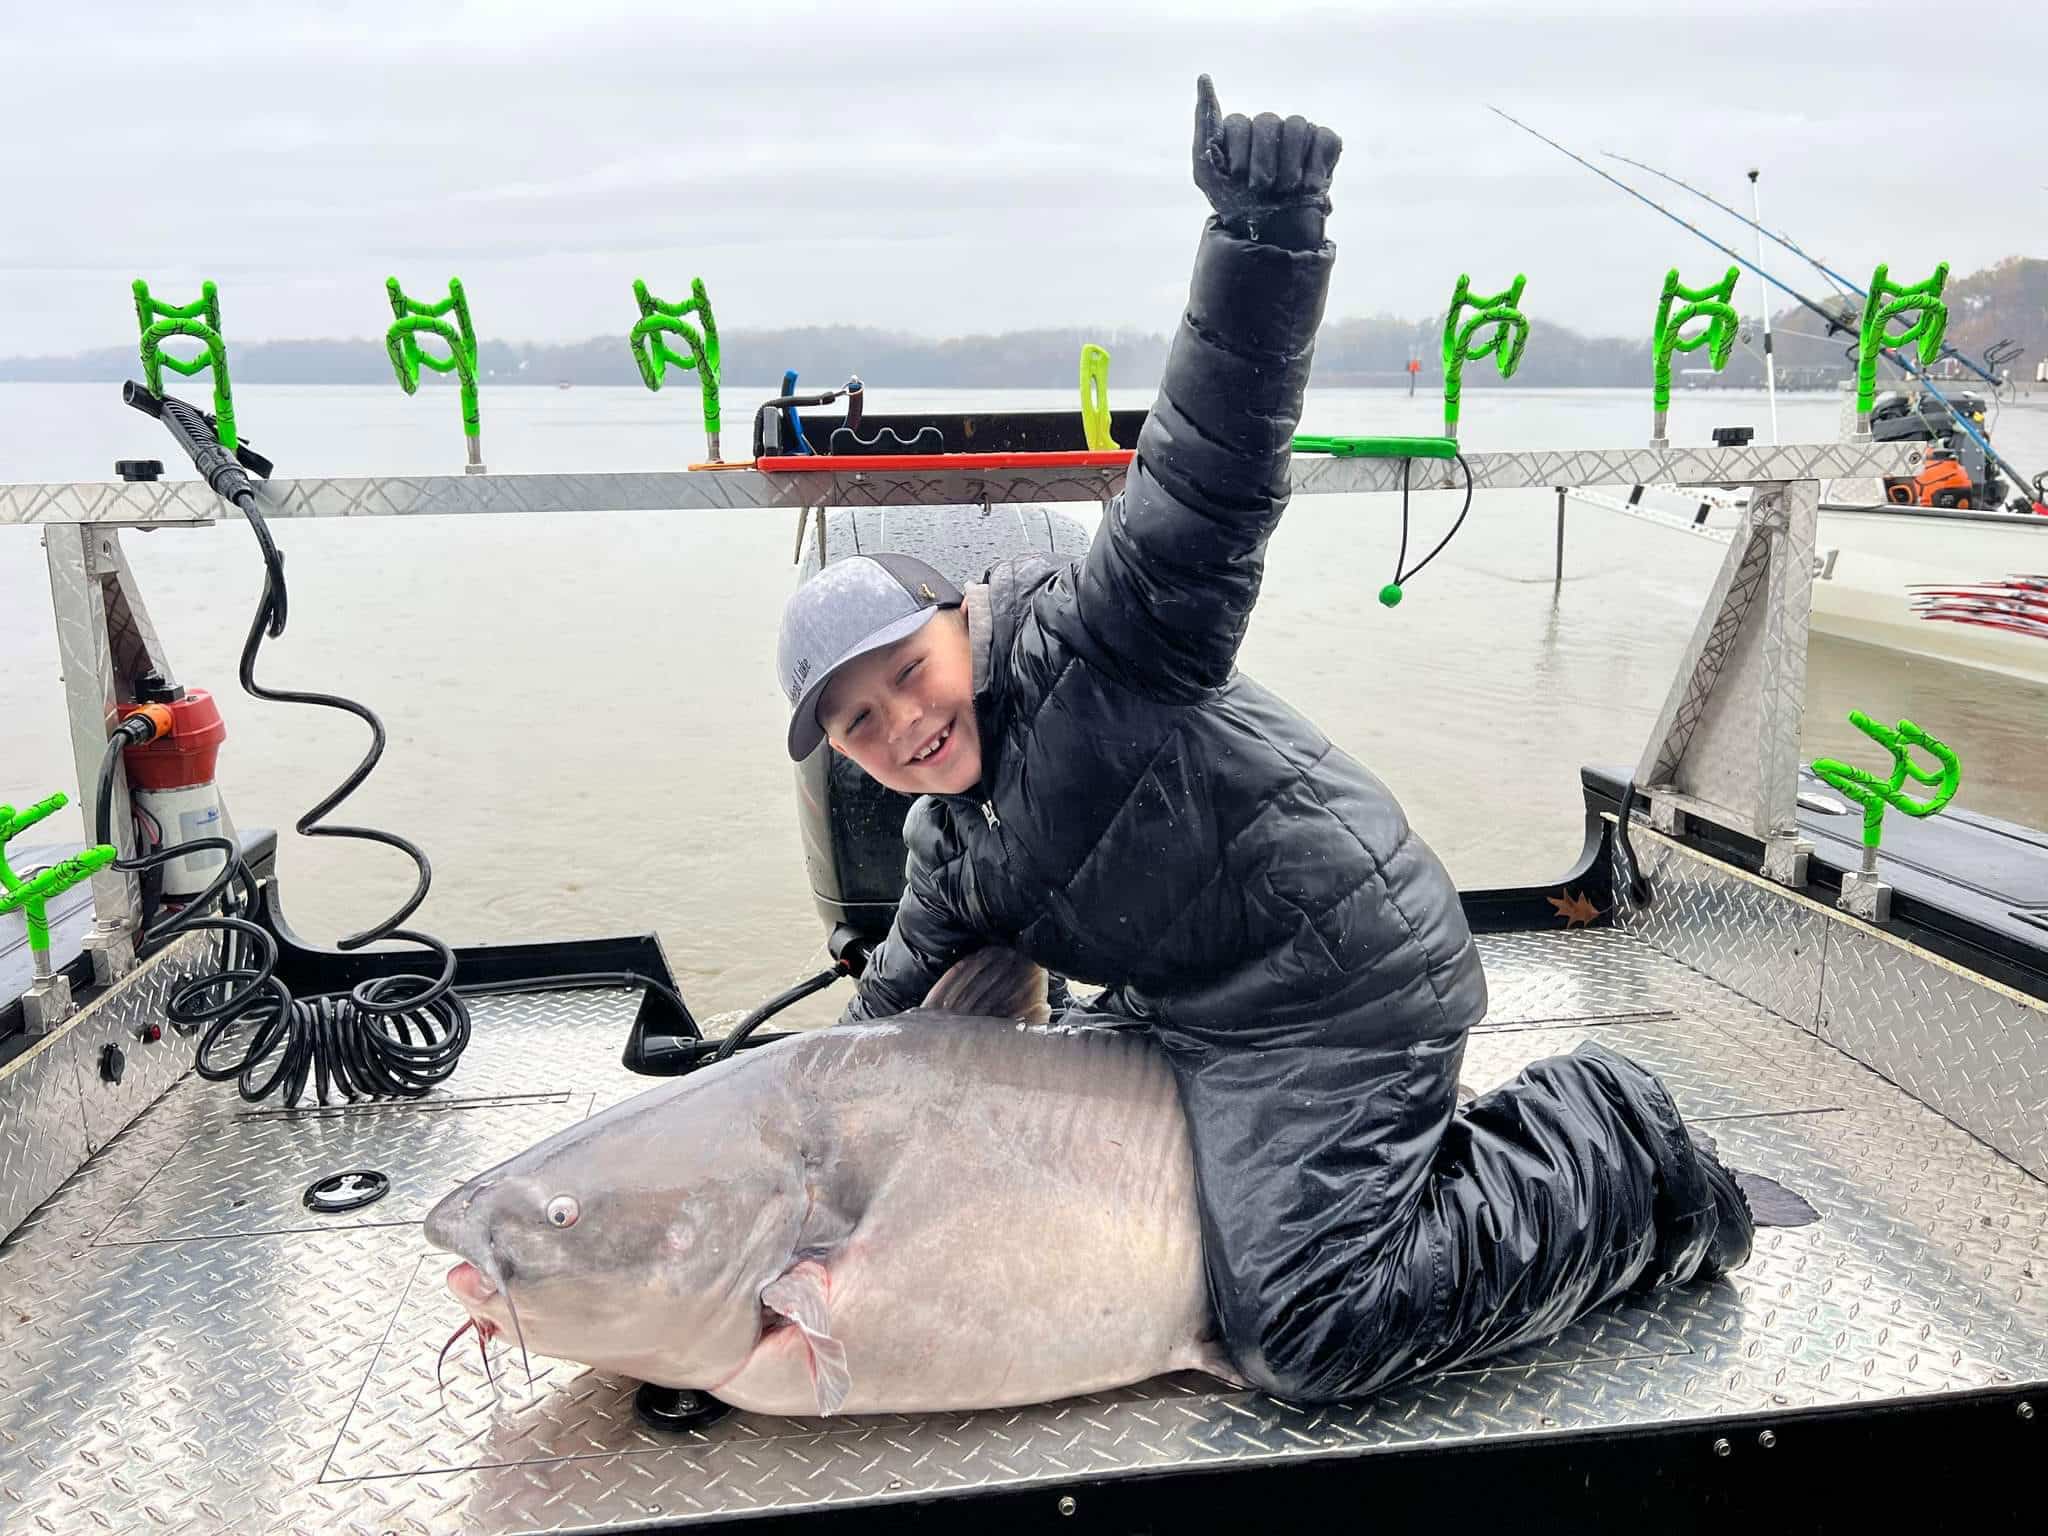 Flathead Luke” Lands Giant Blue Catfish From Virginia's James River